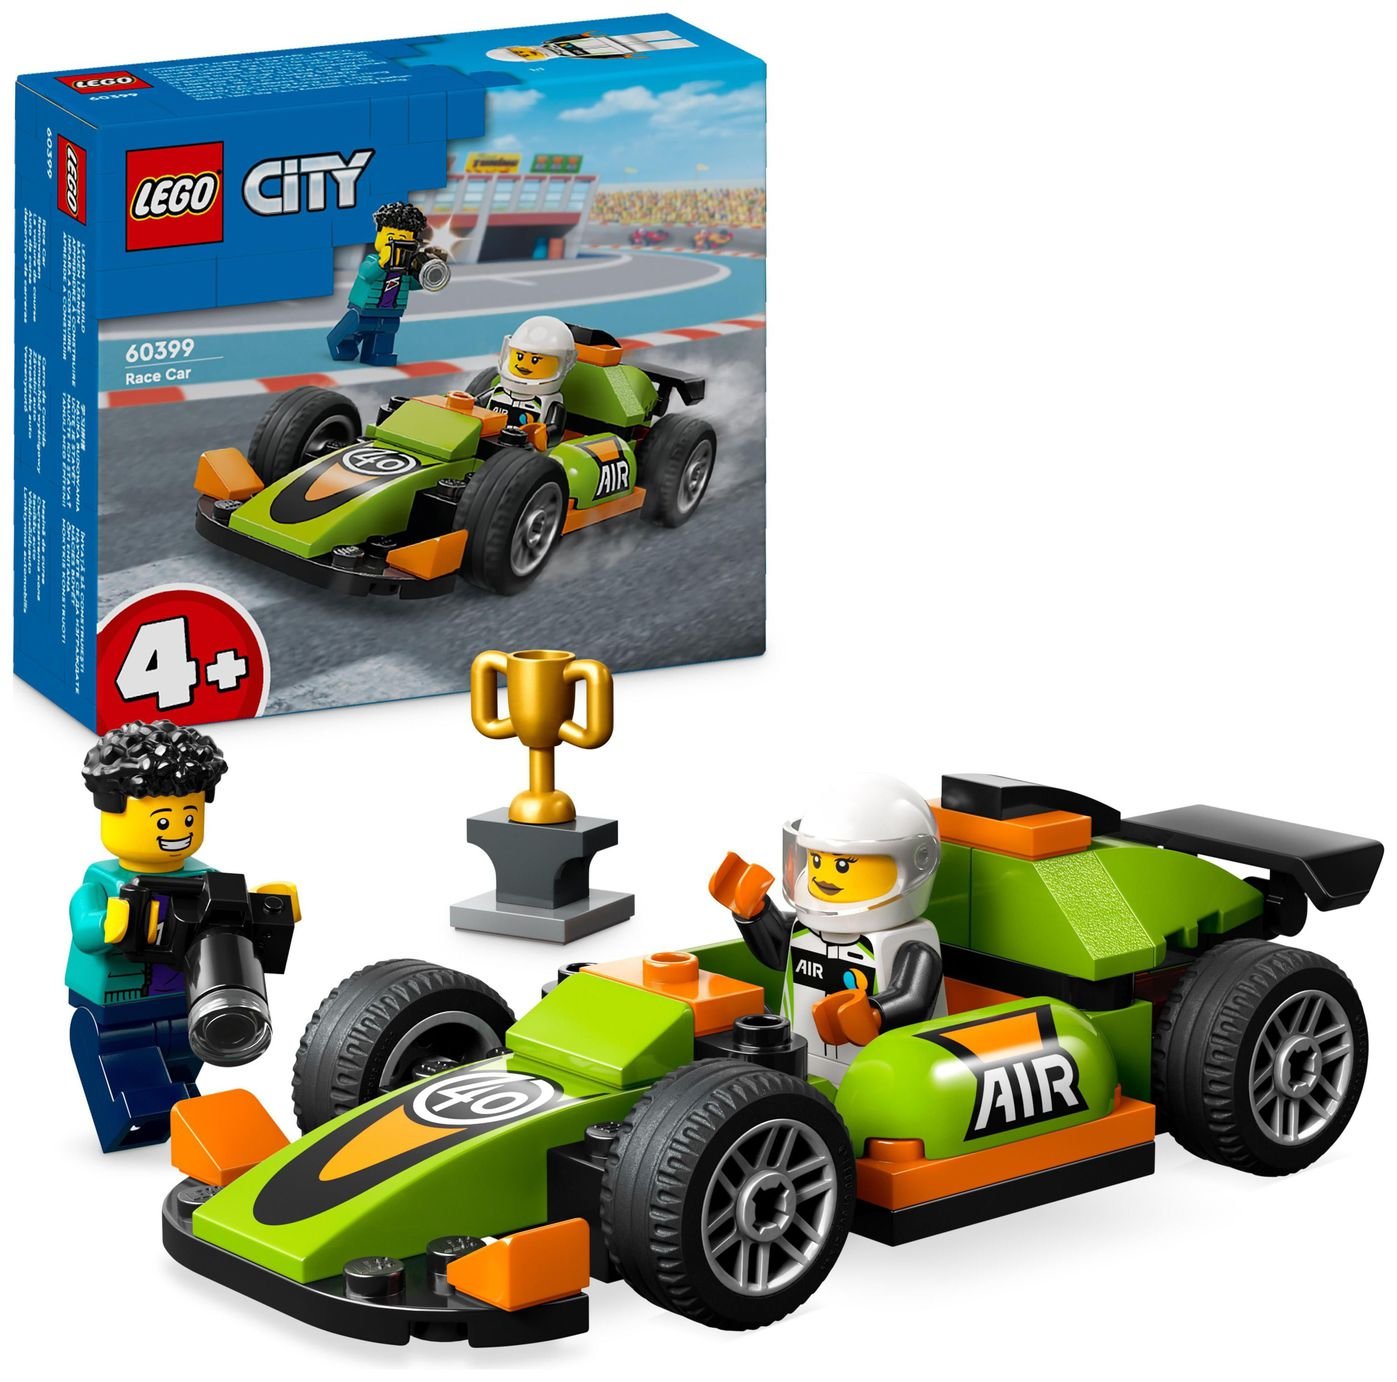 LEGO City Green Race Car Toy 4  Vehicle Building Set 60399